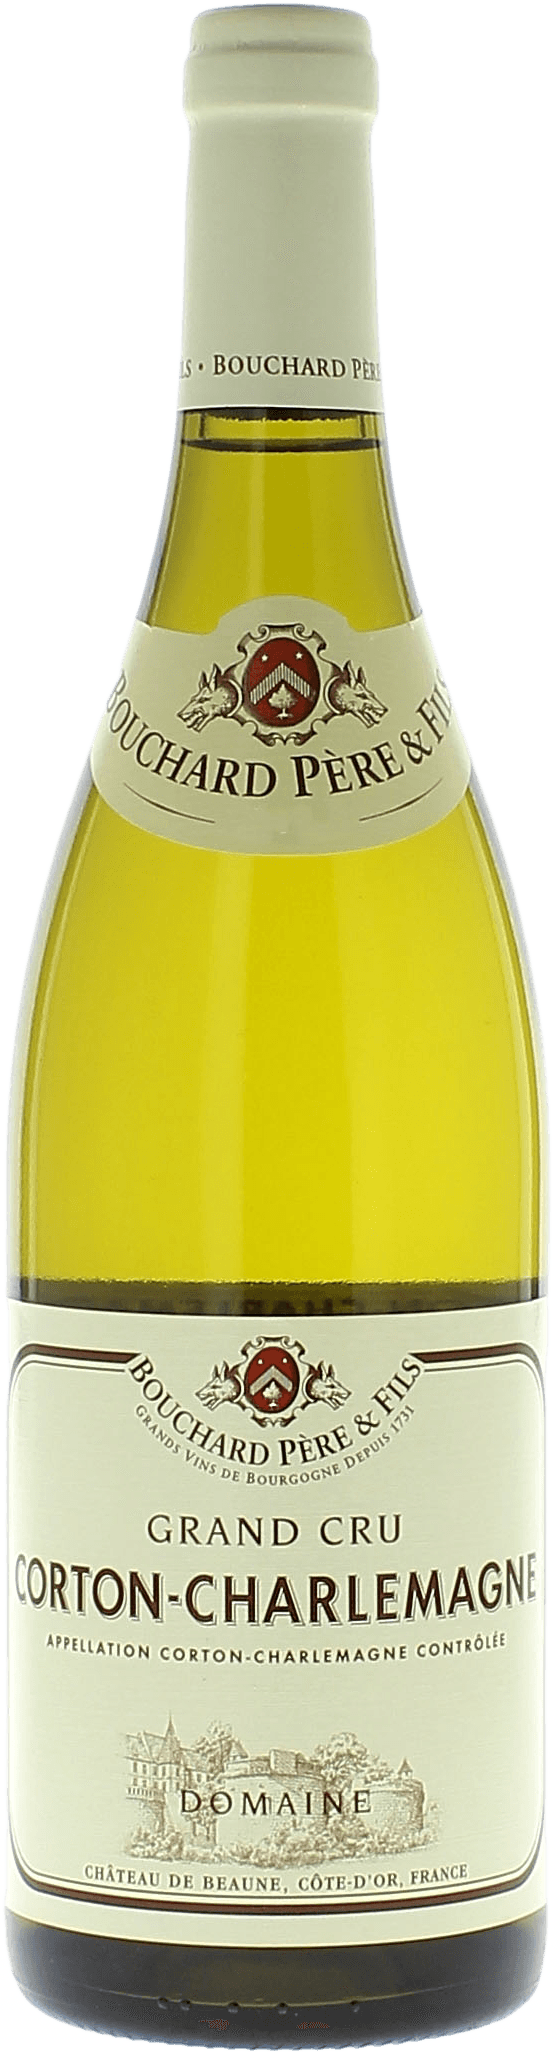 Corton charlemagne grand cru 2021  BOUCHARD Pre et fils, Bourgogne blanc